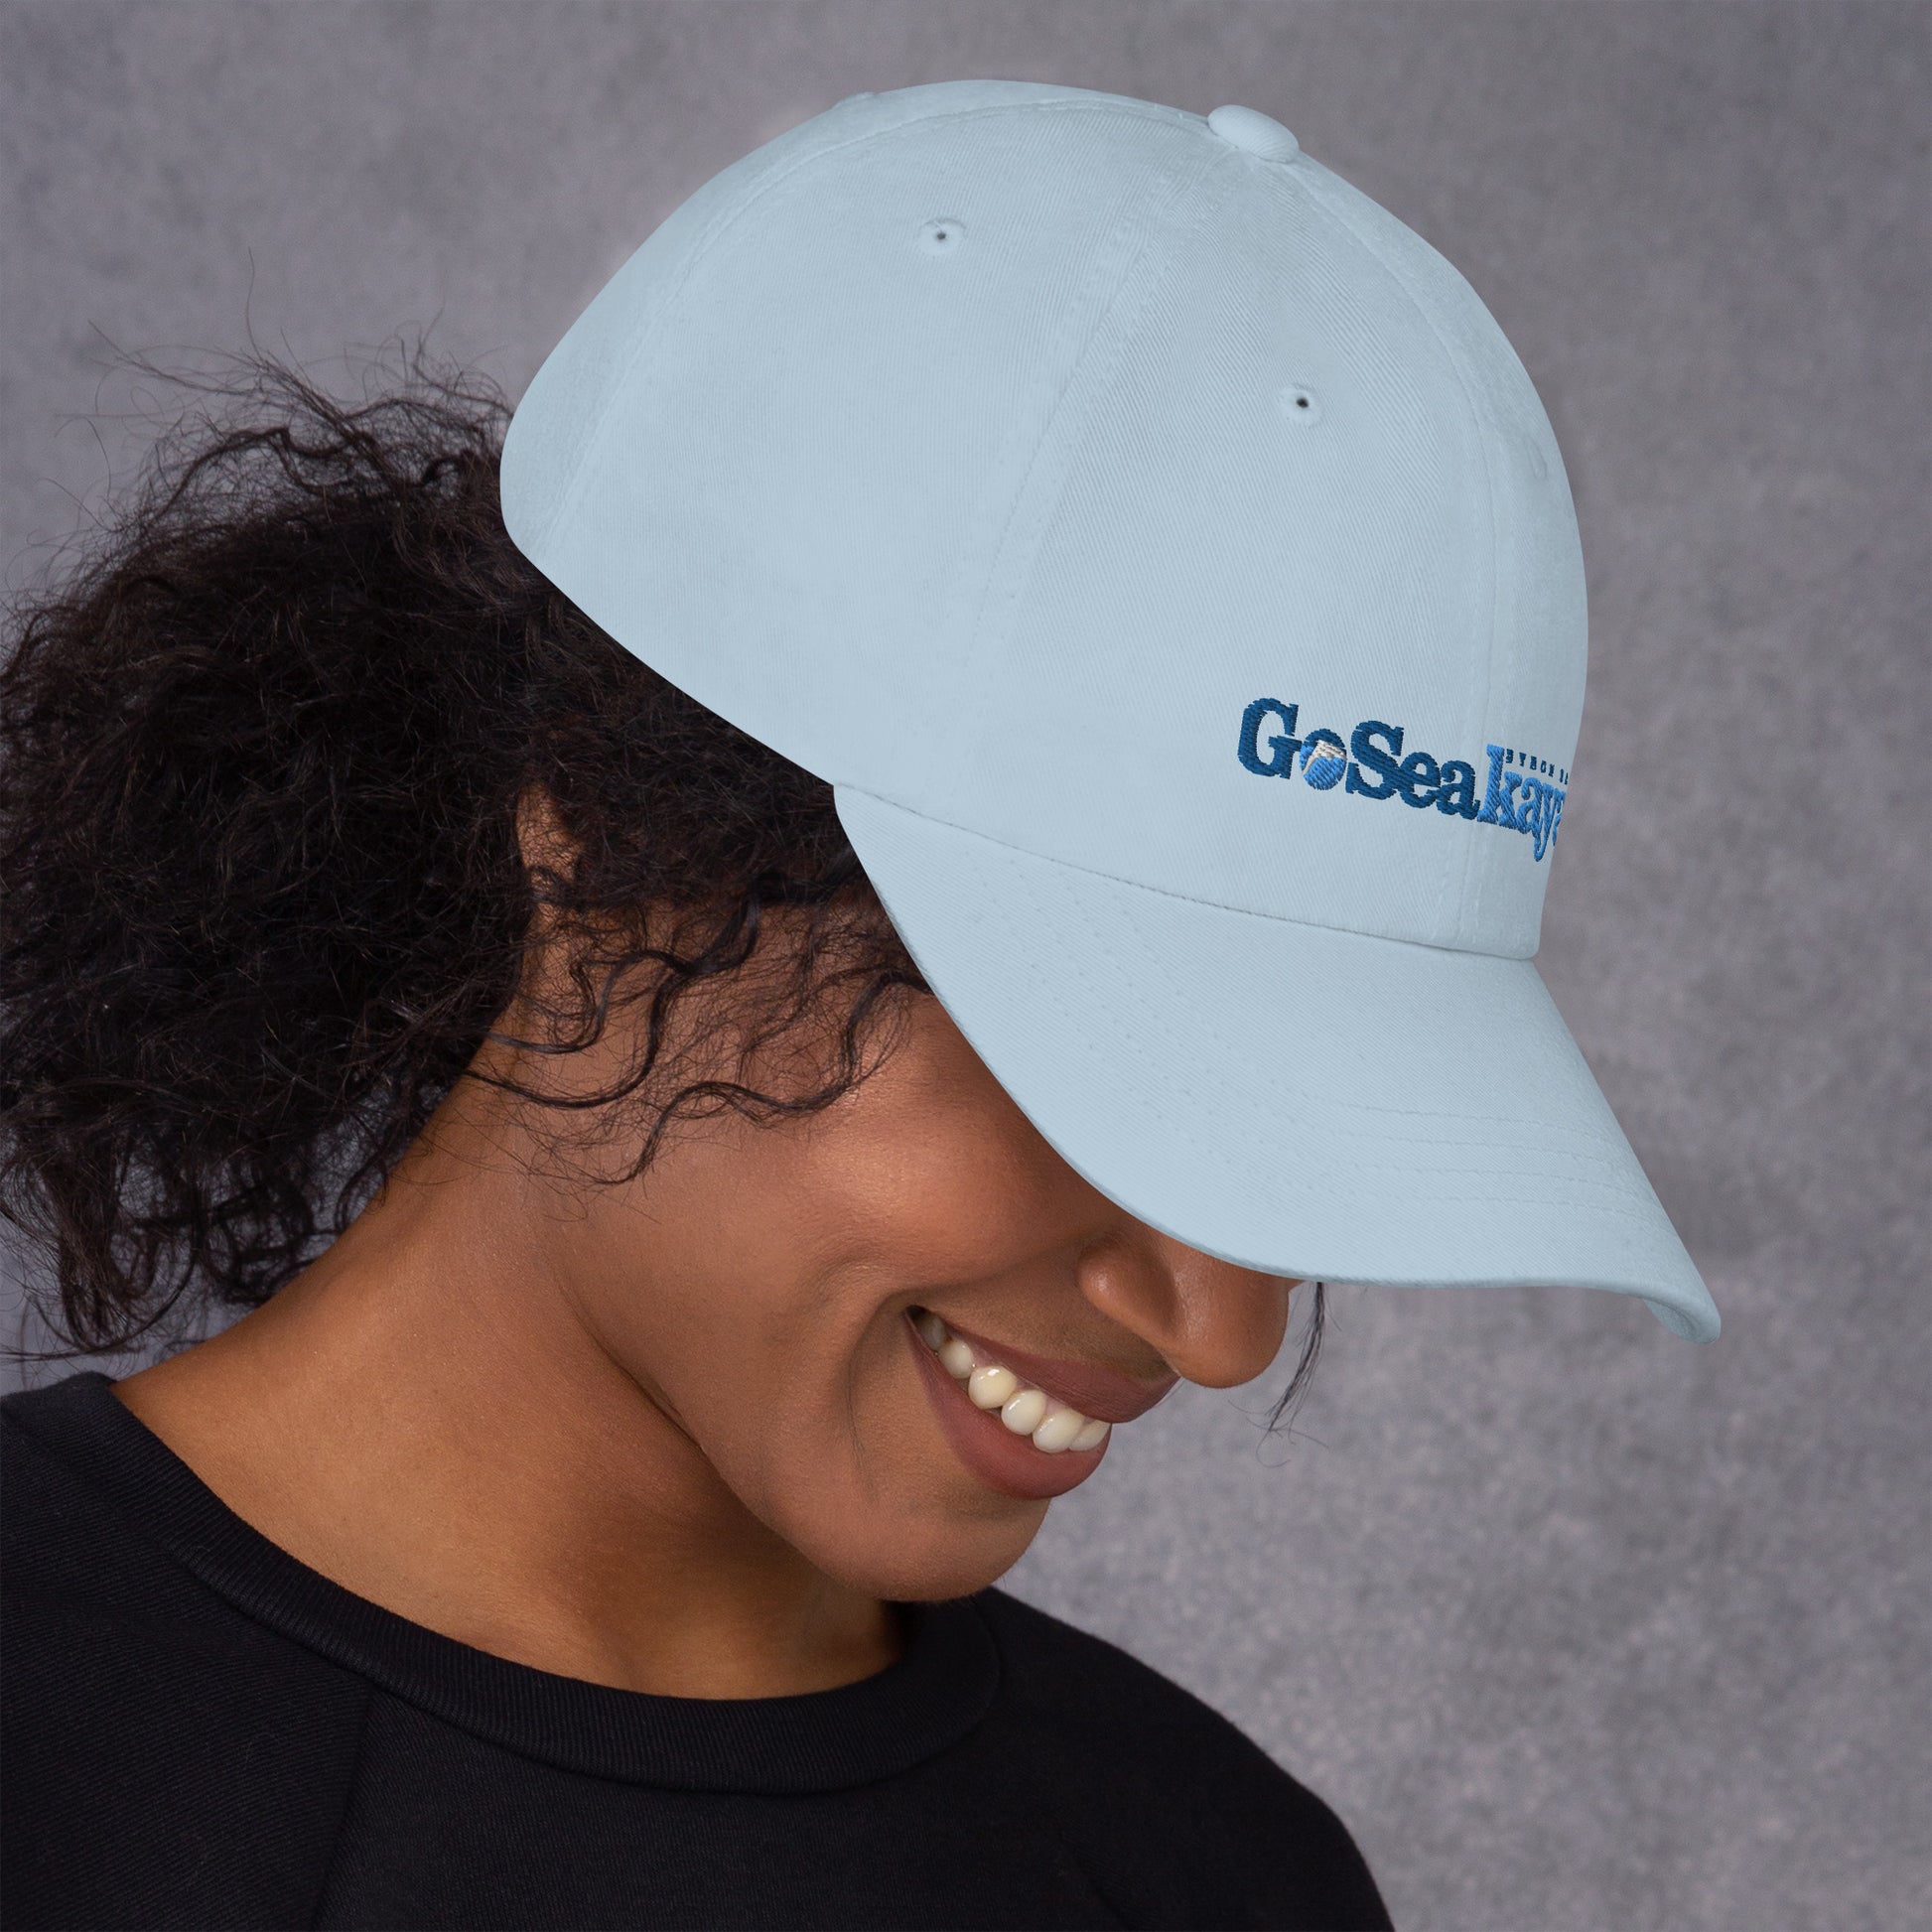  Unisex Cap - Light Blue - Woman wearing cap looking down - Go Sea Kayak logo on front  - Genuine Byron Bay Merchandise | Produced by Go Sea Kayak Byron Bay